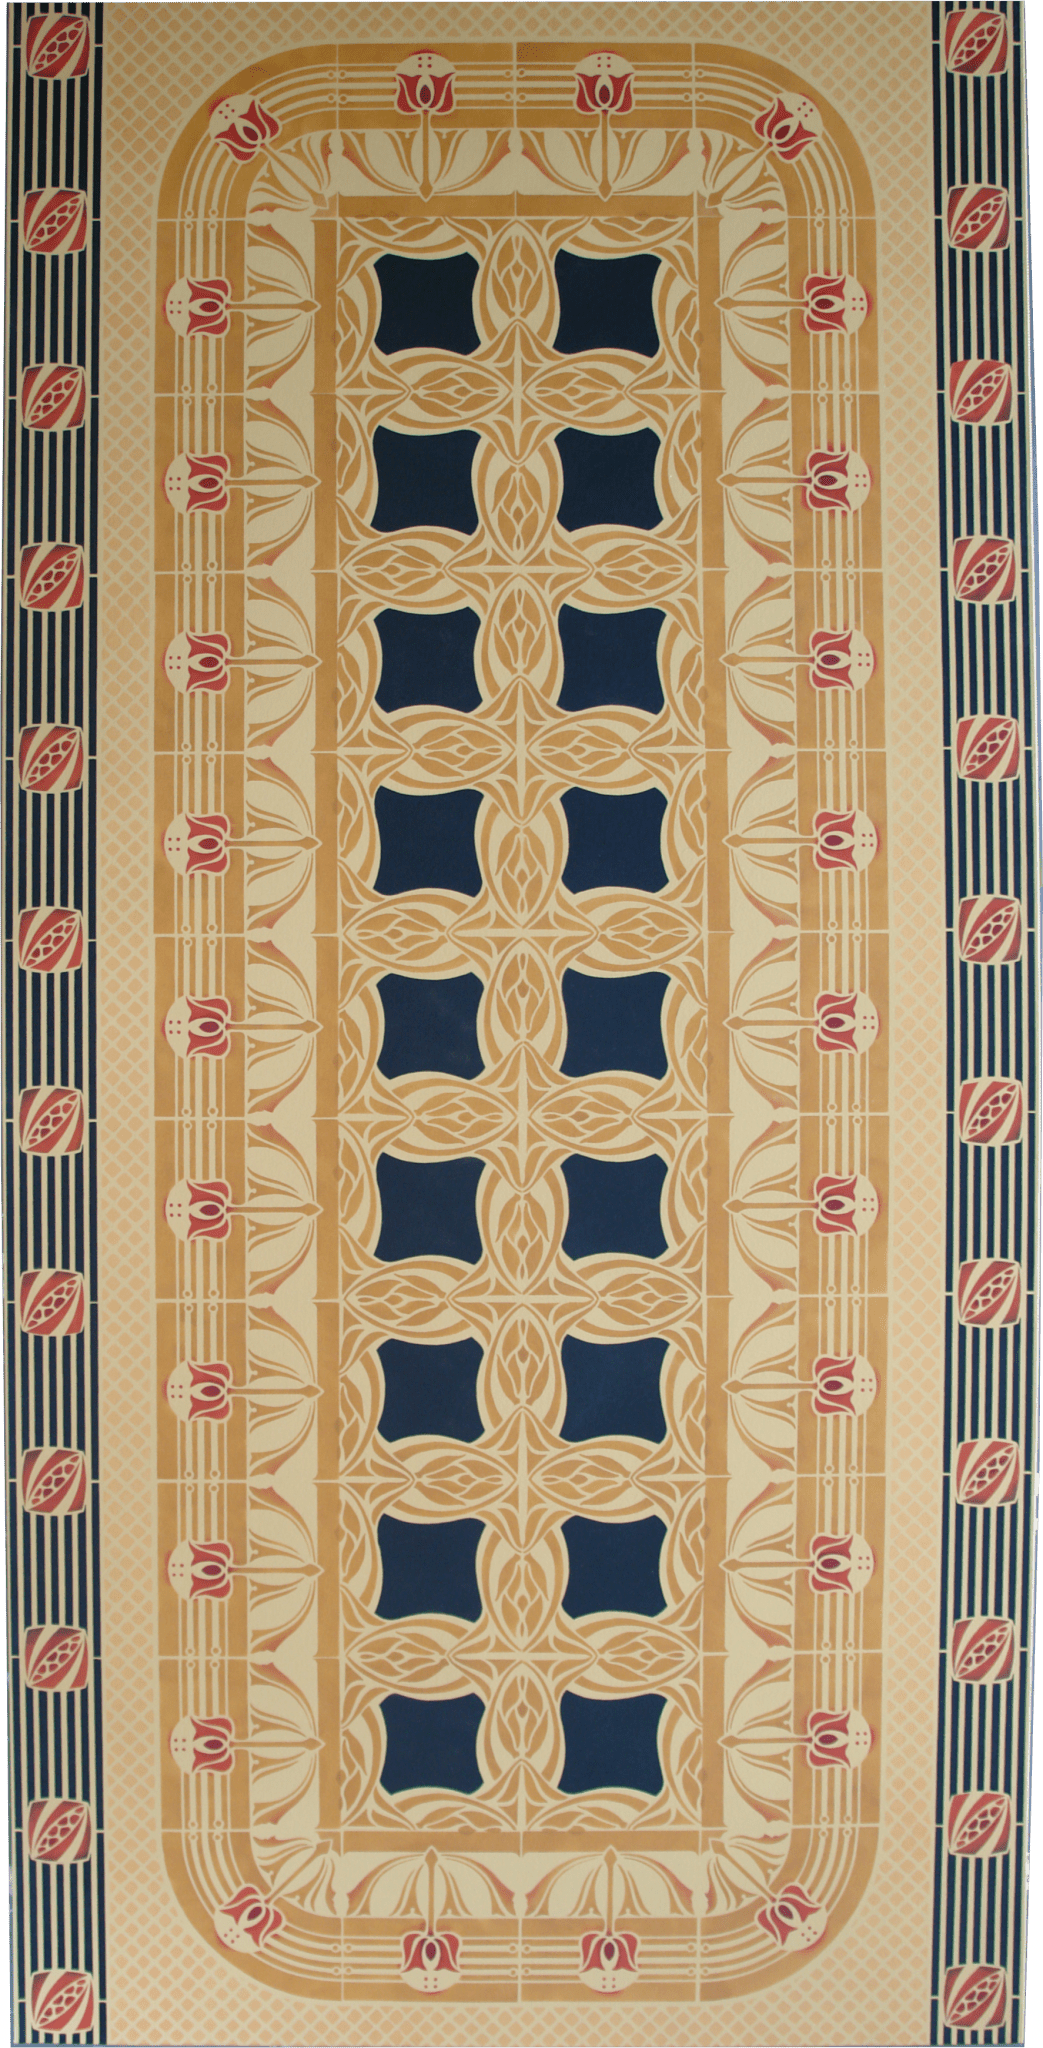 A full image of Wunderlich Floorcloth #4.